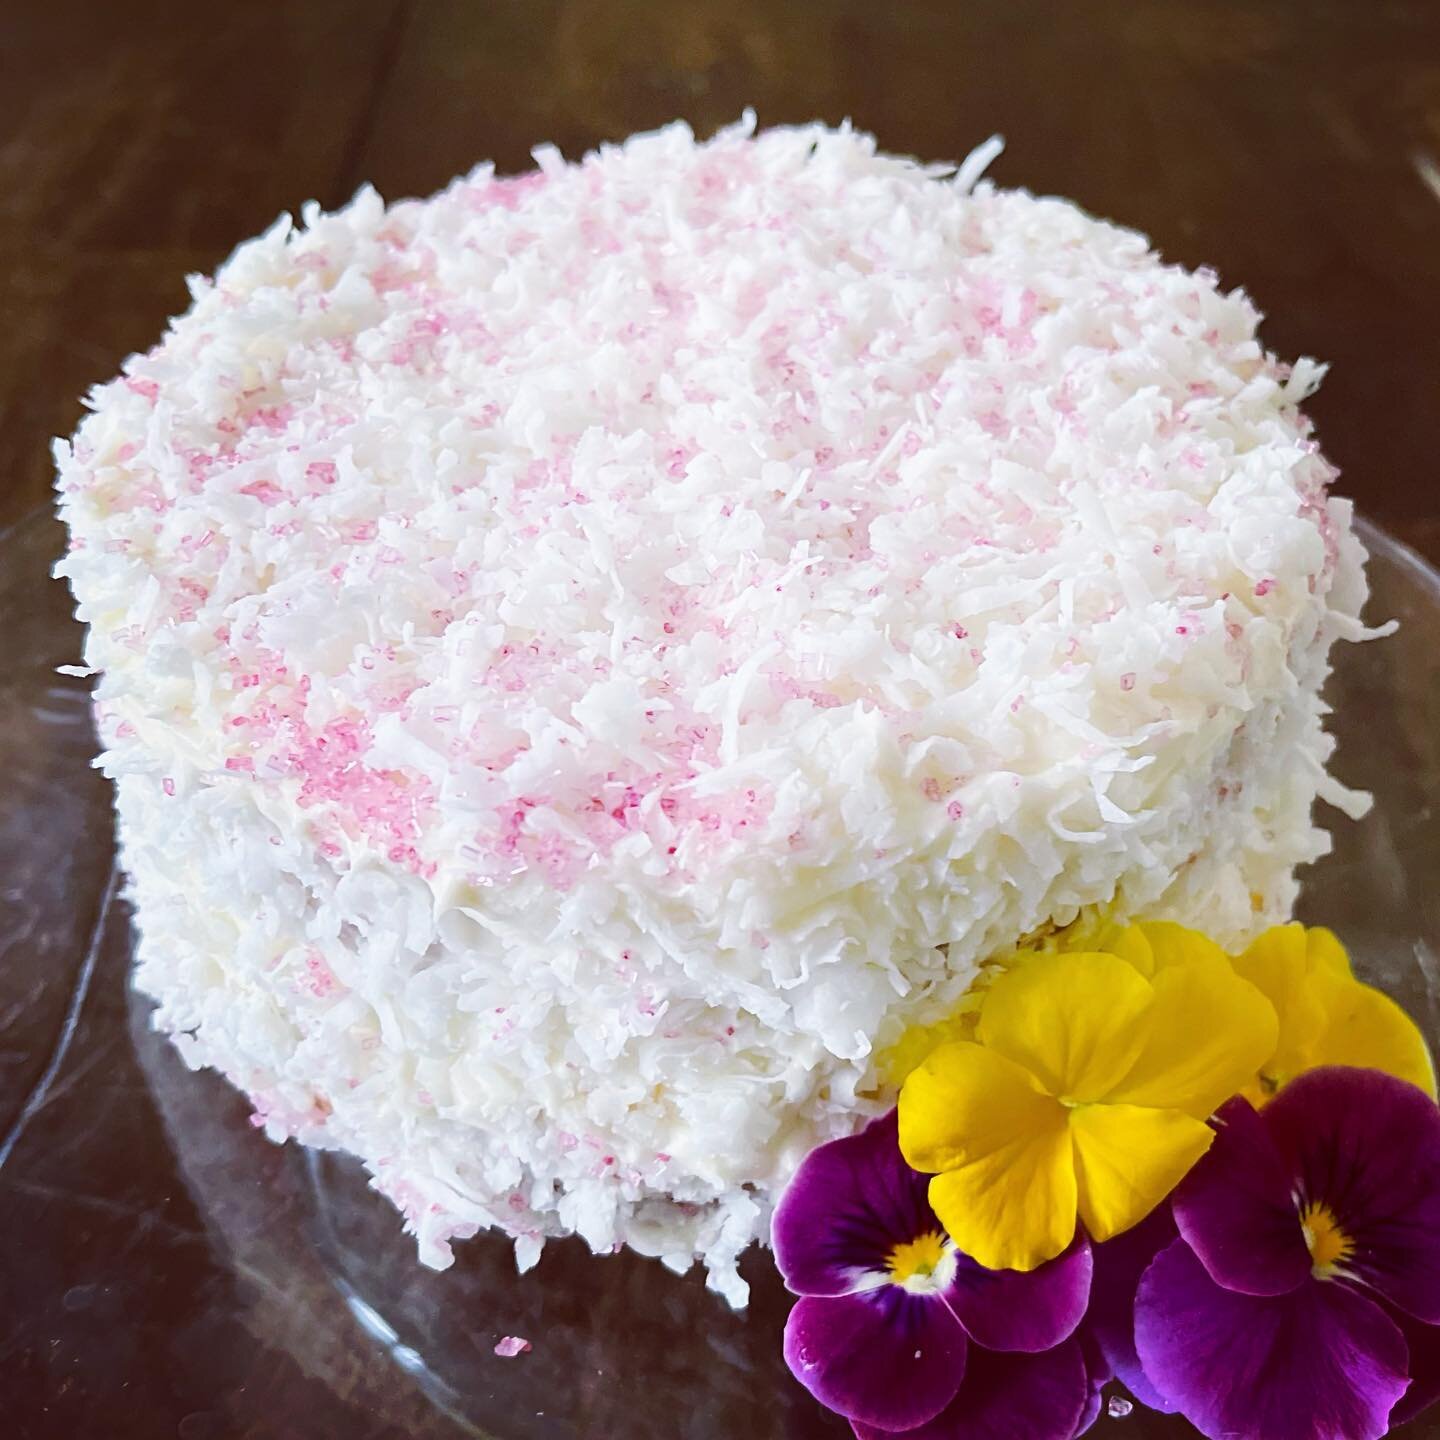 🥥🍍 cake for the birthday girl! #coconutcake #pineapplefilling #pinacolada #madewithlove